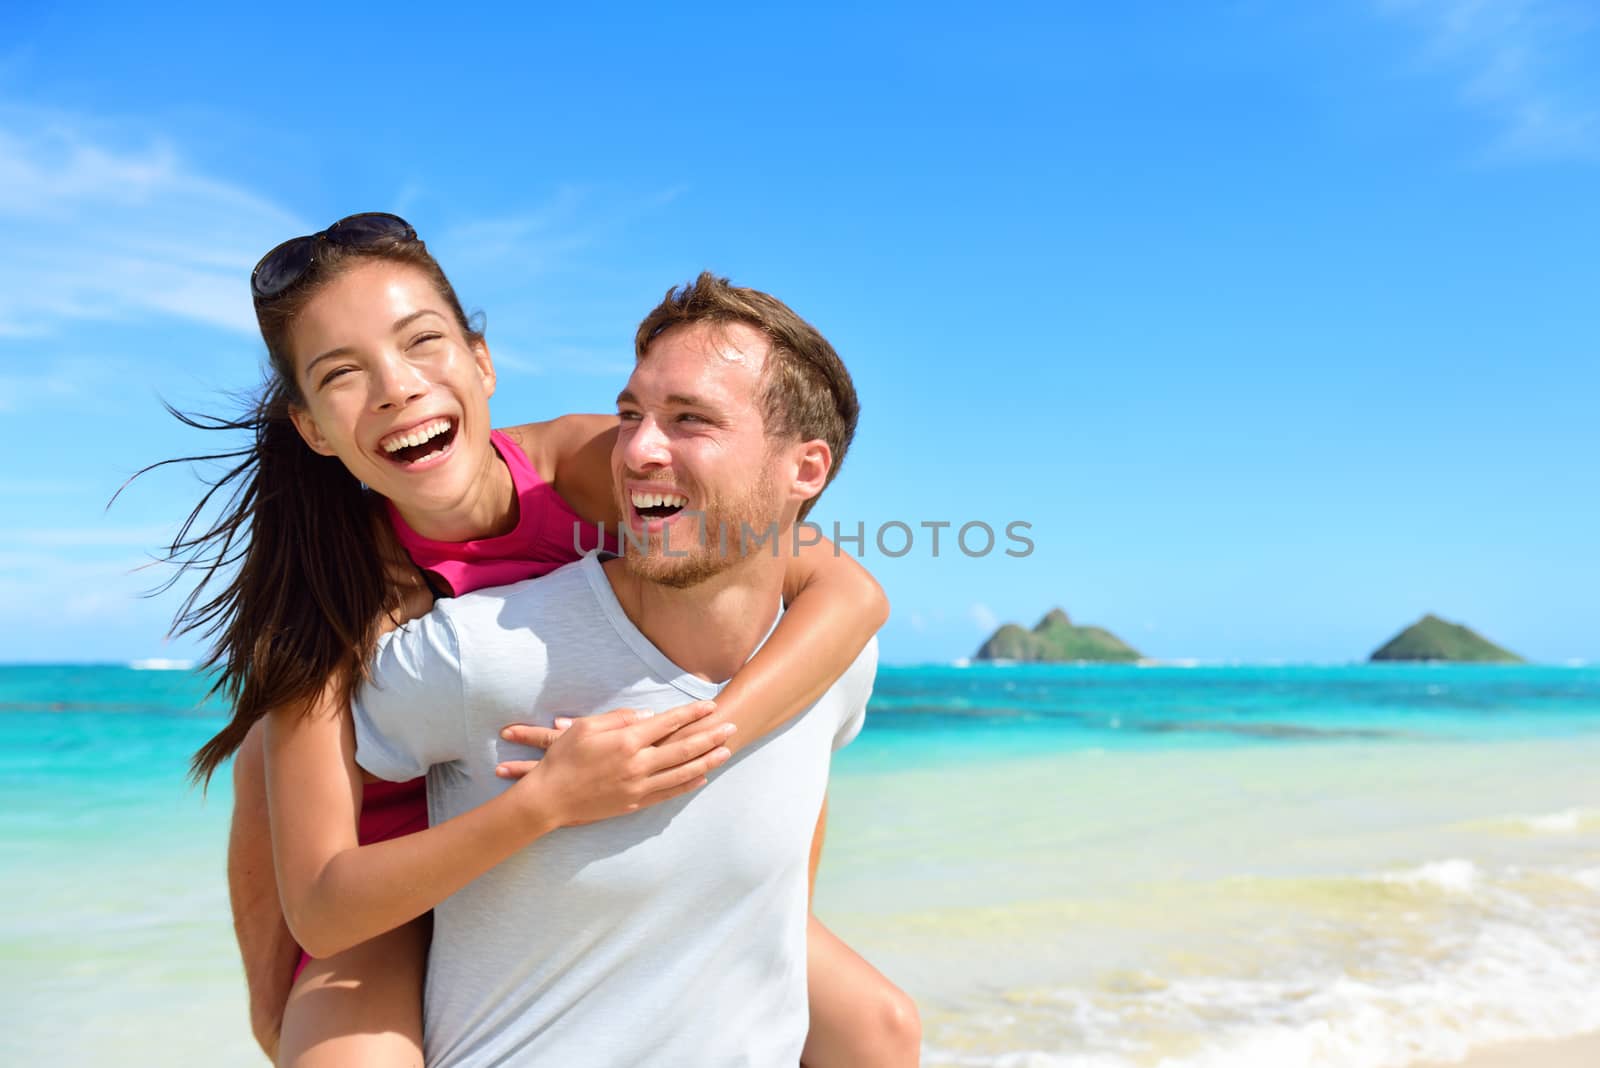 Beach couple having fun laughing on Hawaii holiday by Maridav